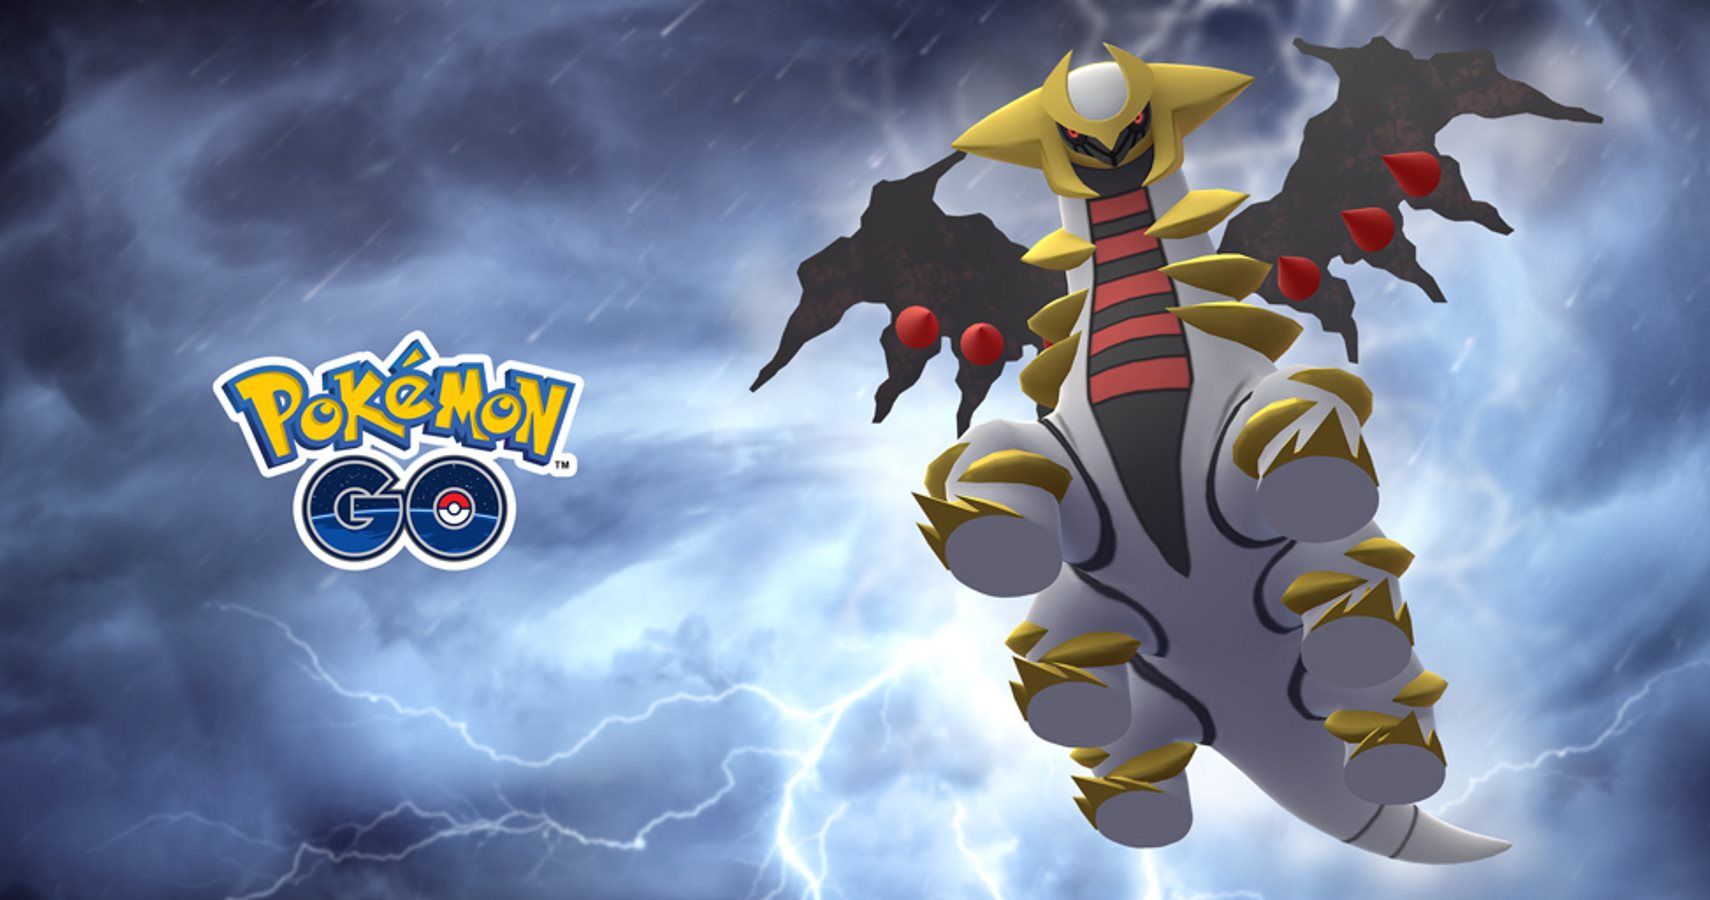 Legendary Pokémon Giratina Returns To Raids March 28th Here's How To